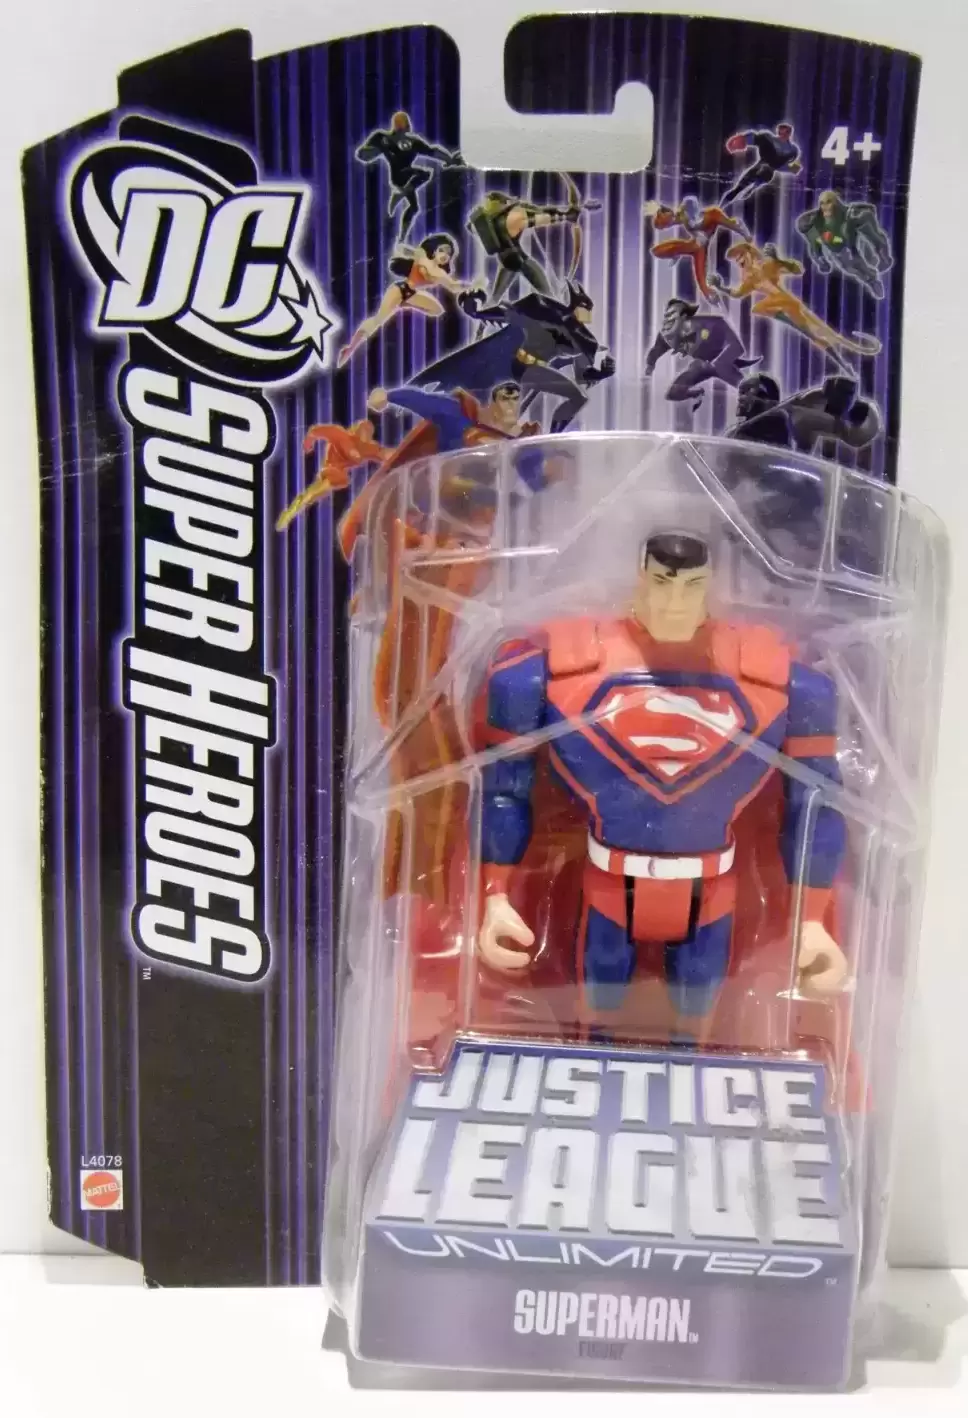 DC Super Heroes - Superman - Justice League Unlimited